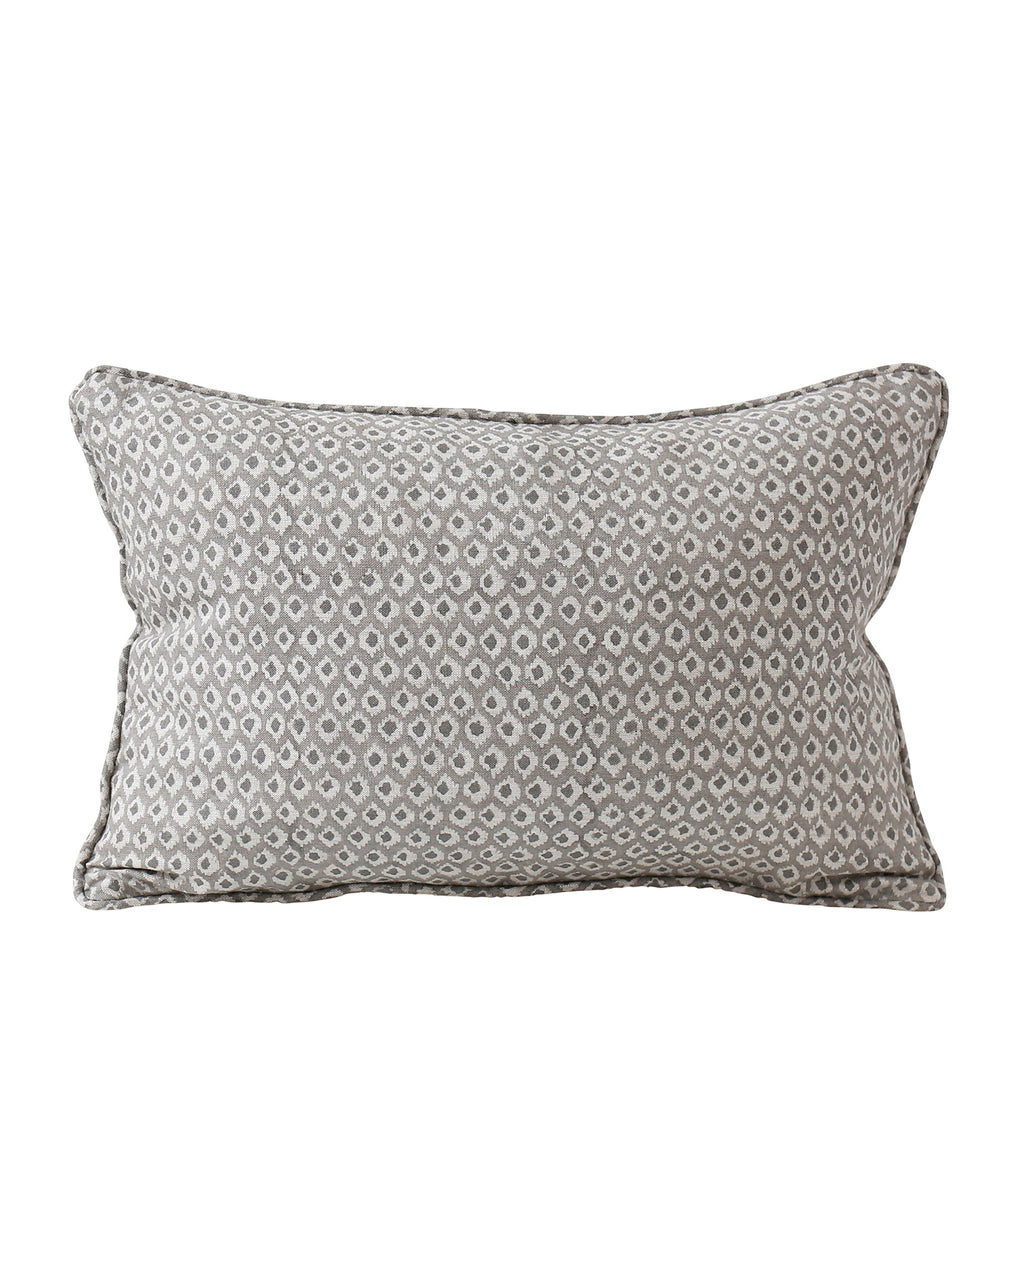 Patola Mud linen cushion 30x45cm